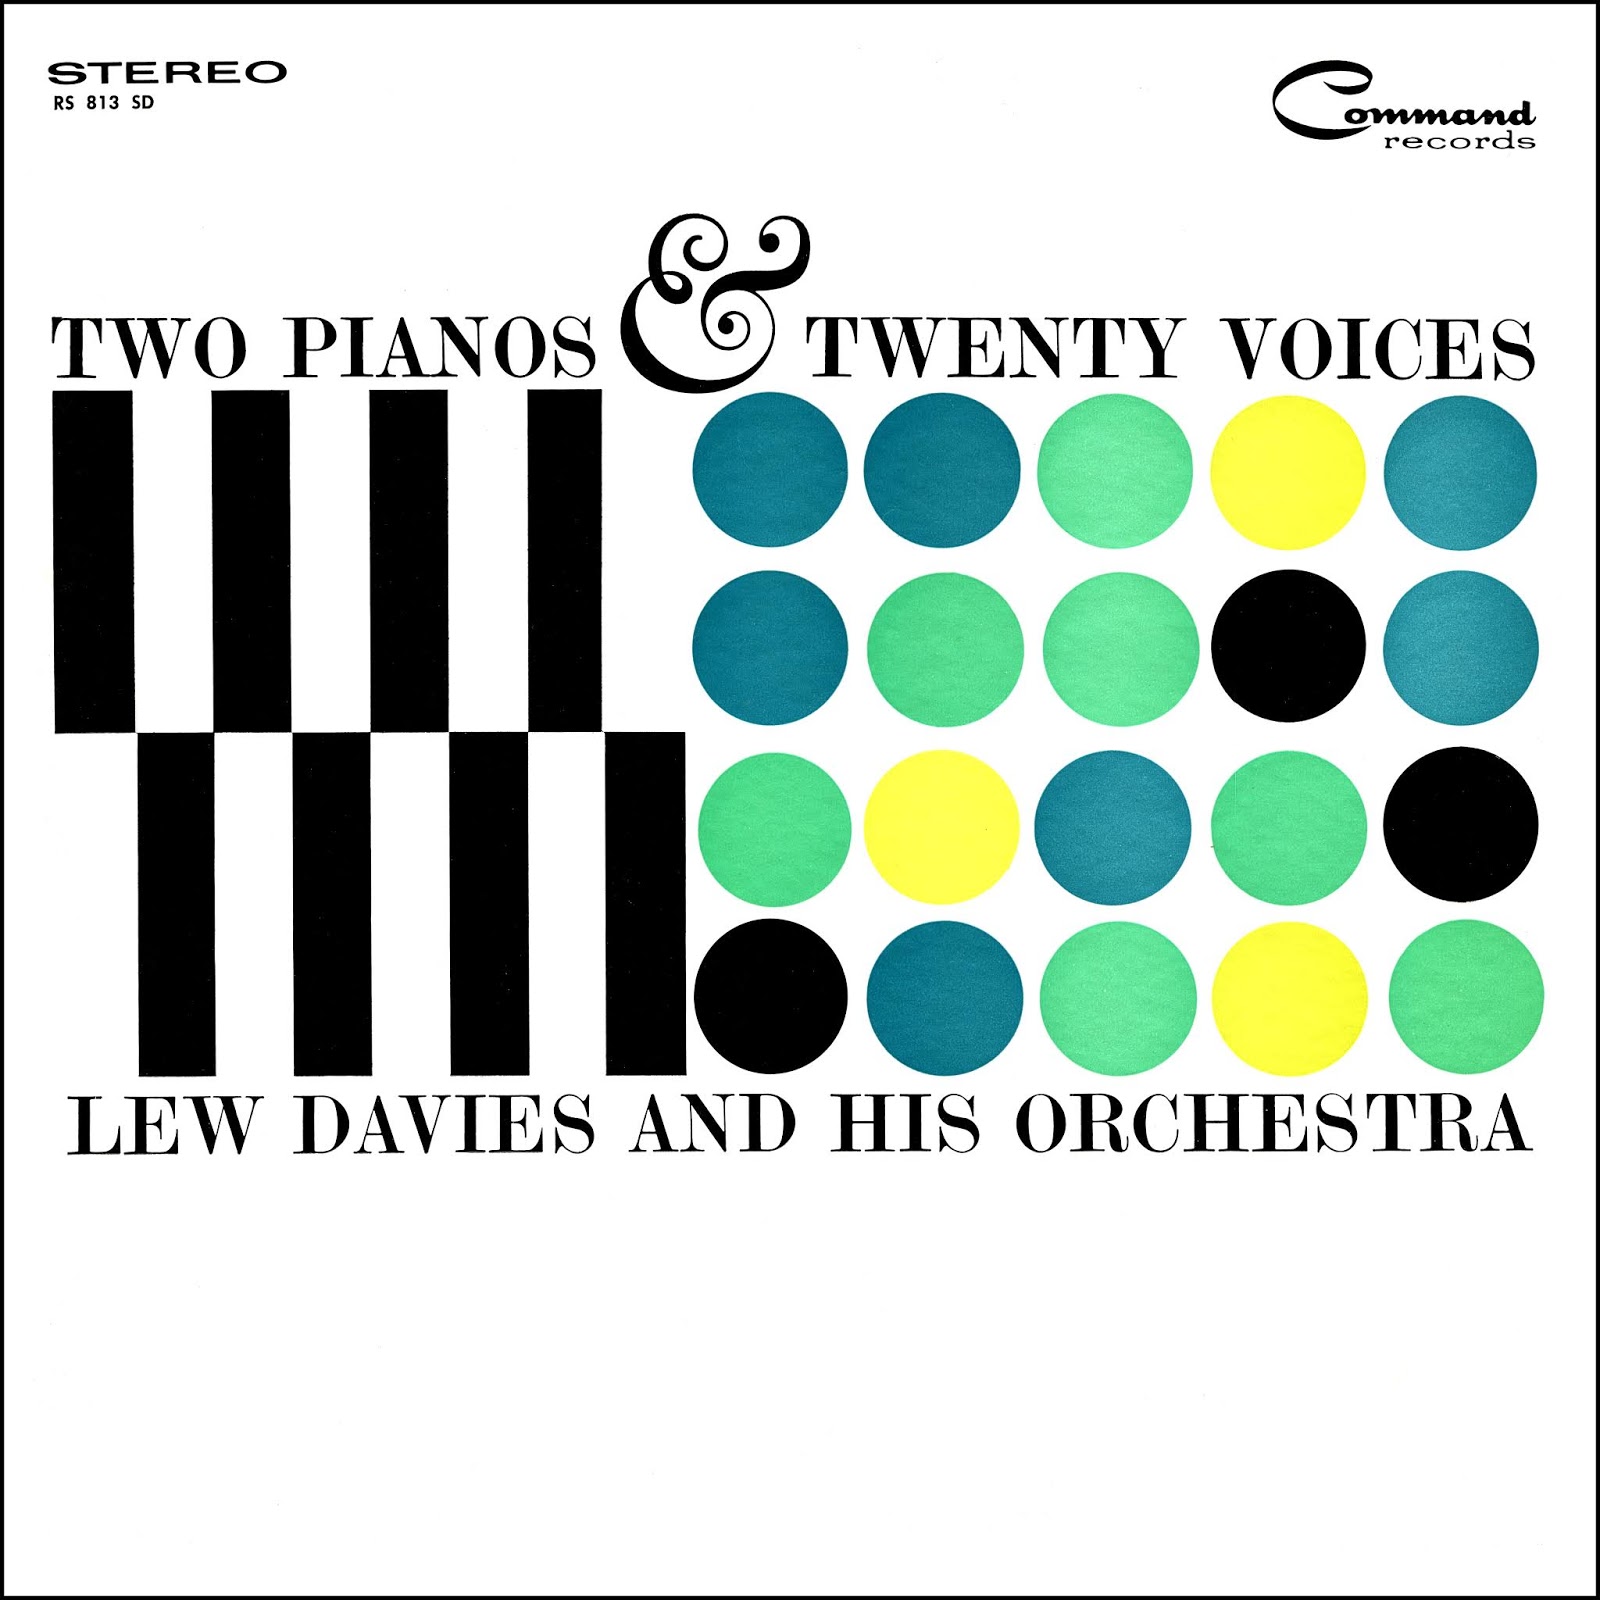 Two pianos. Blue Note records обложки. Музыкальная обложка 1960. 1/2 Orchestra. Jazz album Covers.